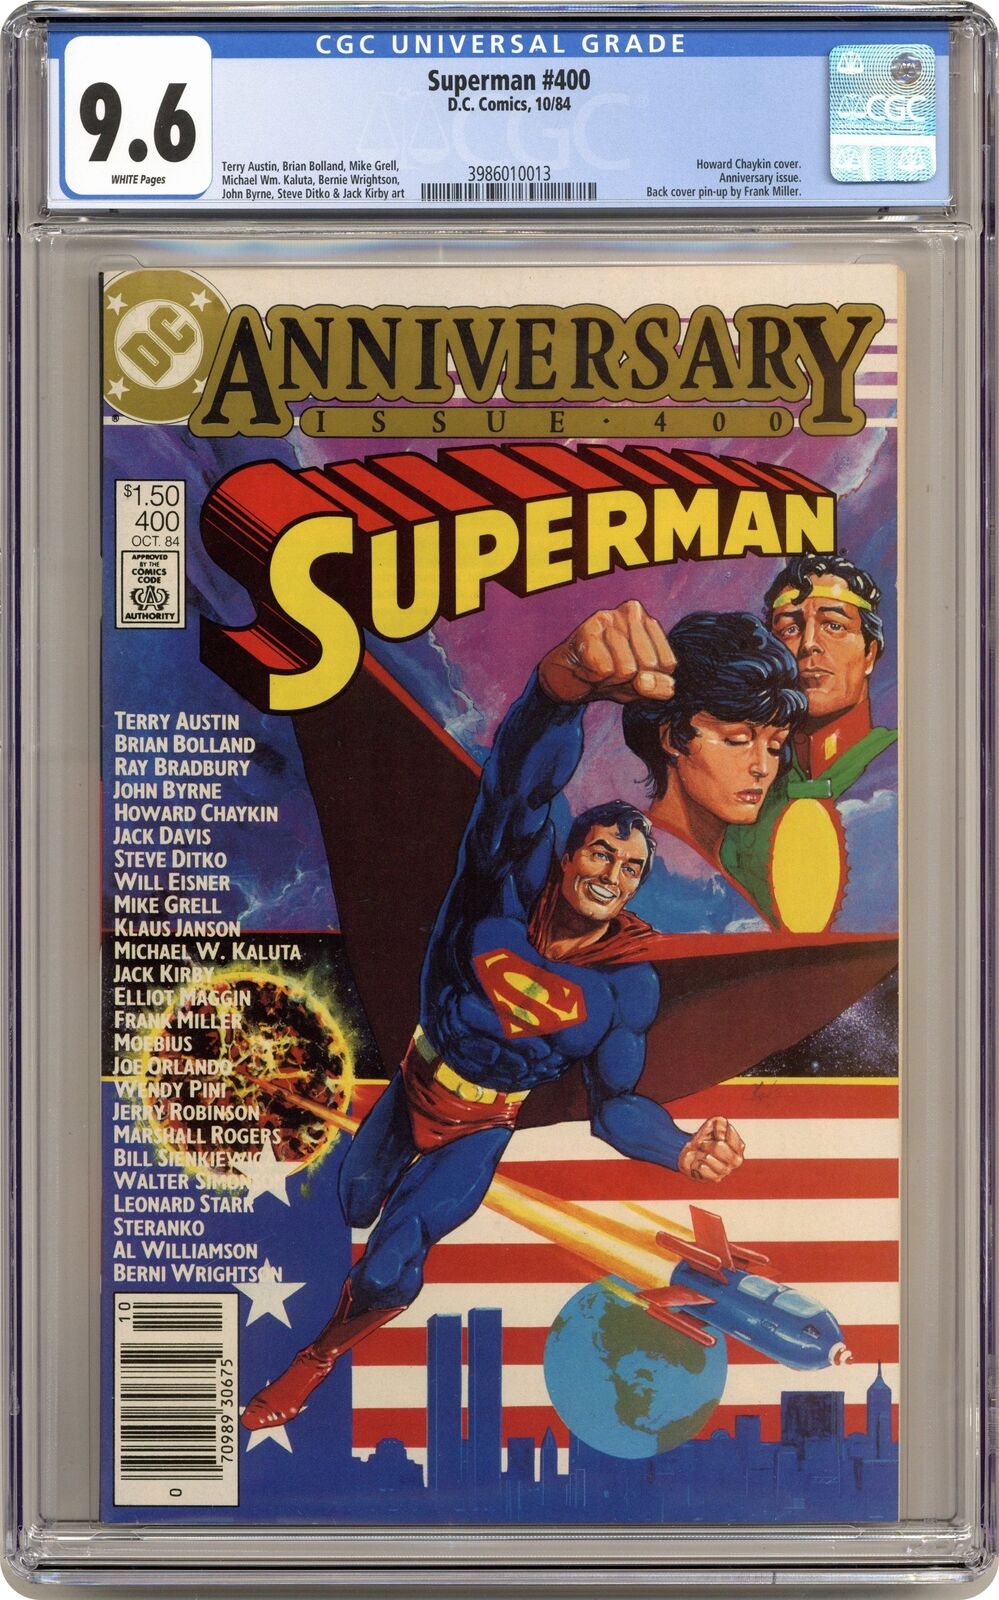 Superman #400 CGC 9.6 1984 3986010013